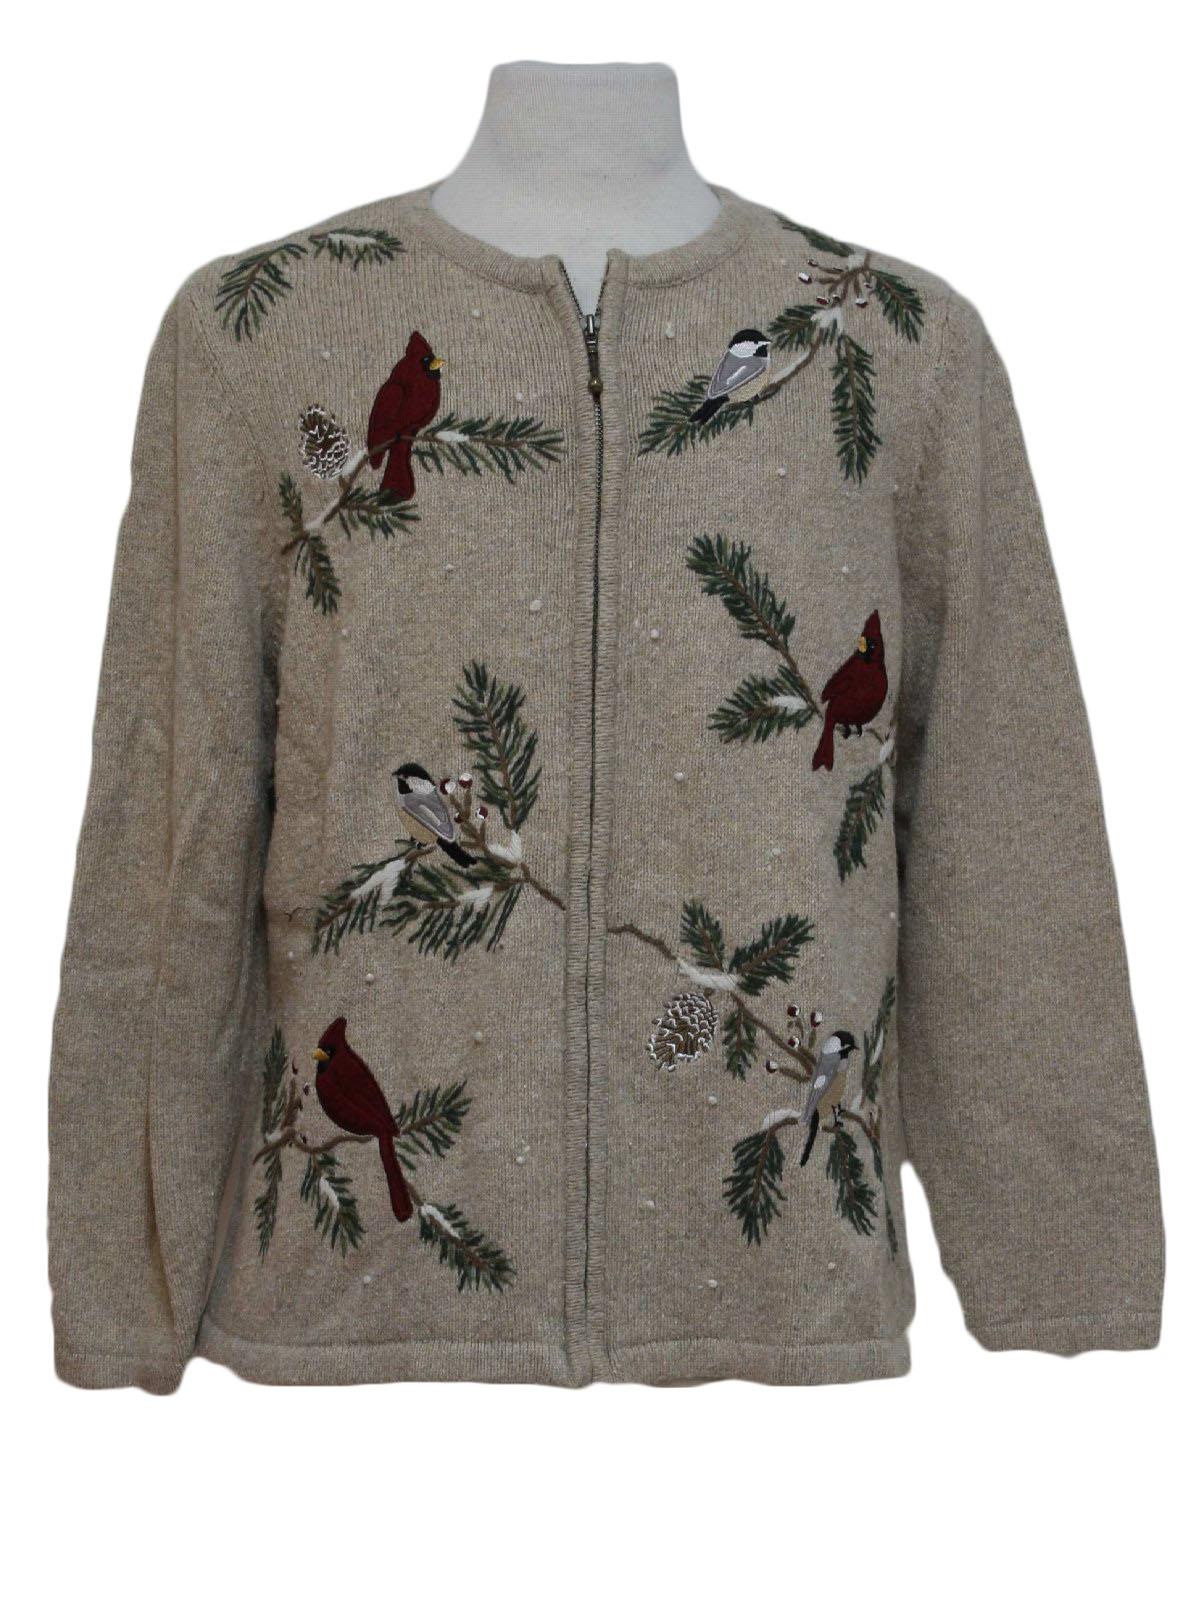 Womens Ugly Christmas Sweater: -Croft and Barrow- Womens beige flecked ...